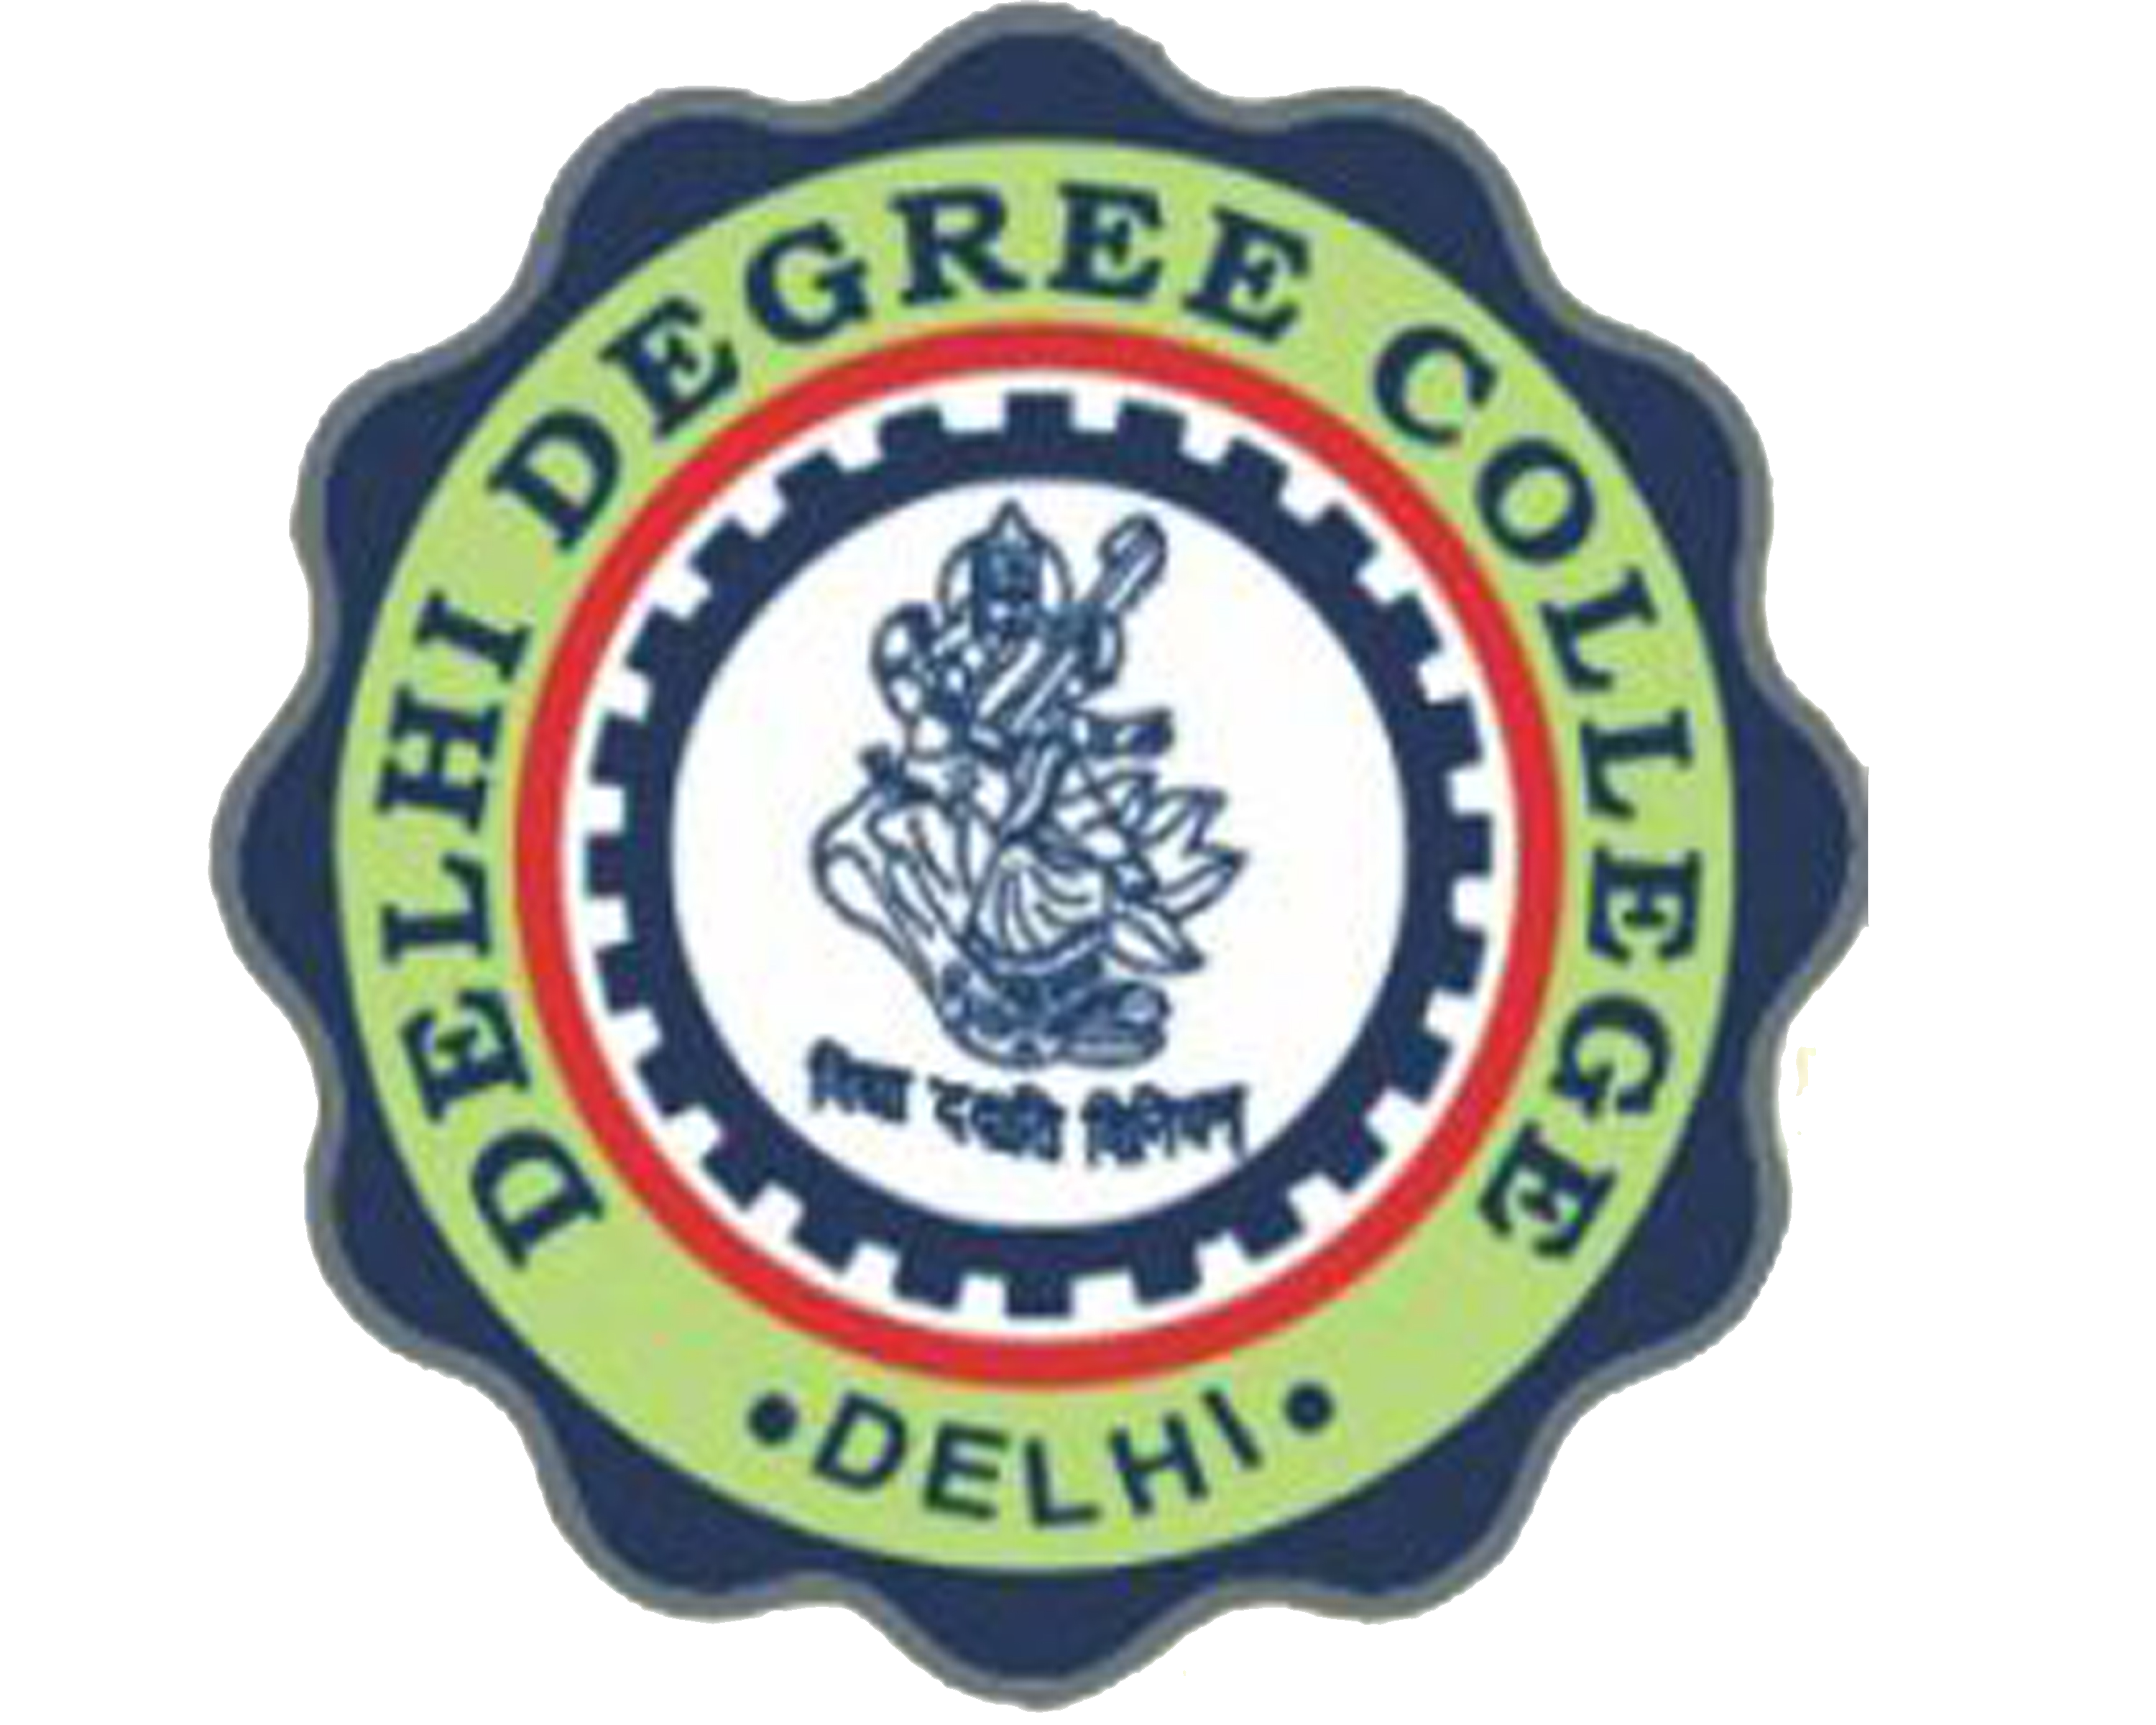 Delhi Degree College|Colleges|Education